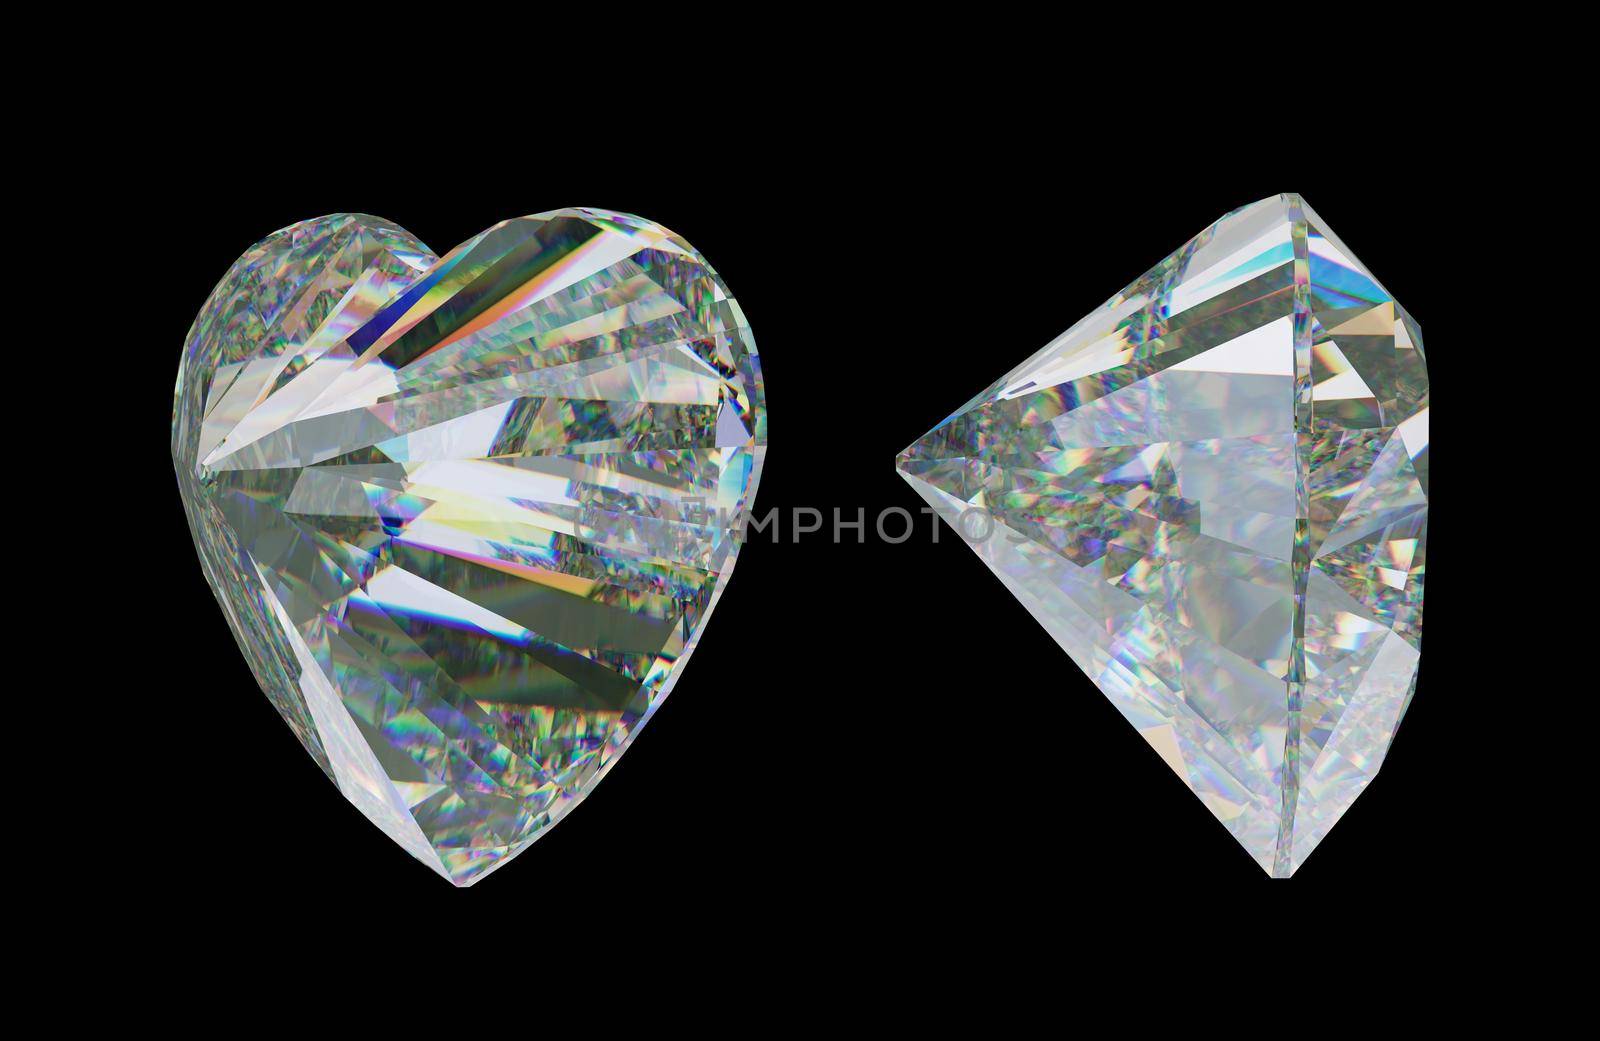 Side views of Large heart shape cut diamond on black by Arsgera